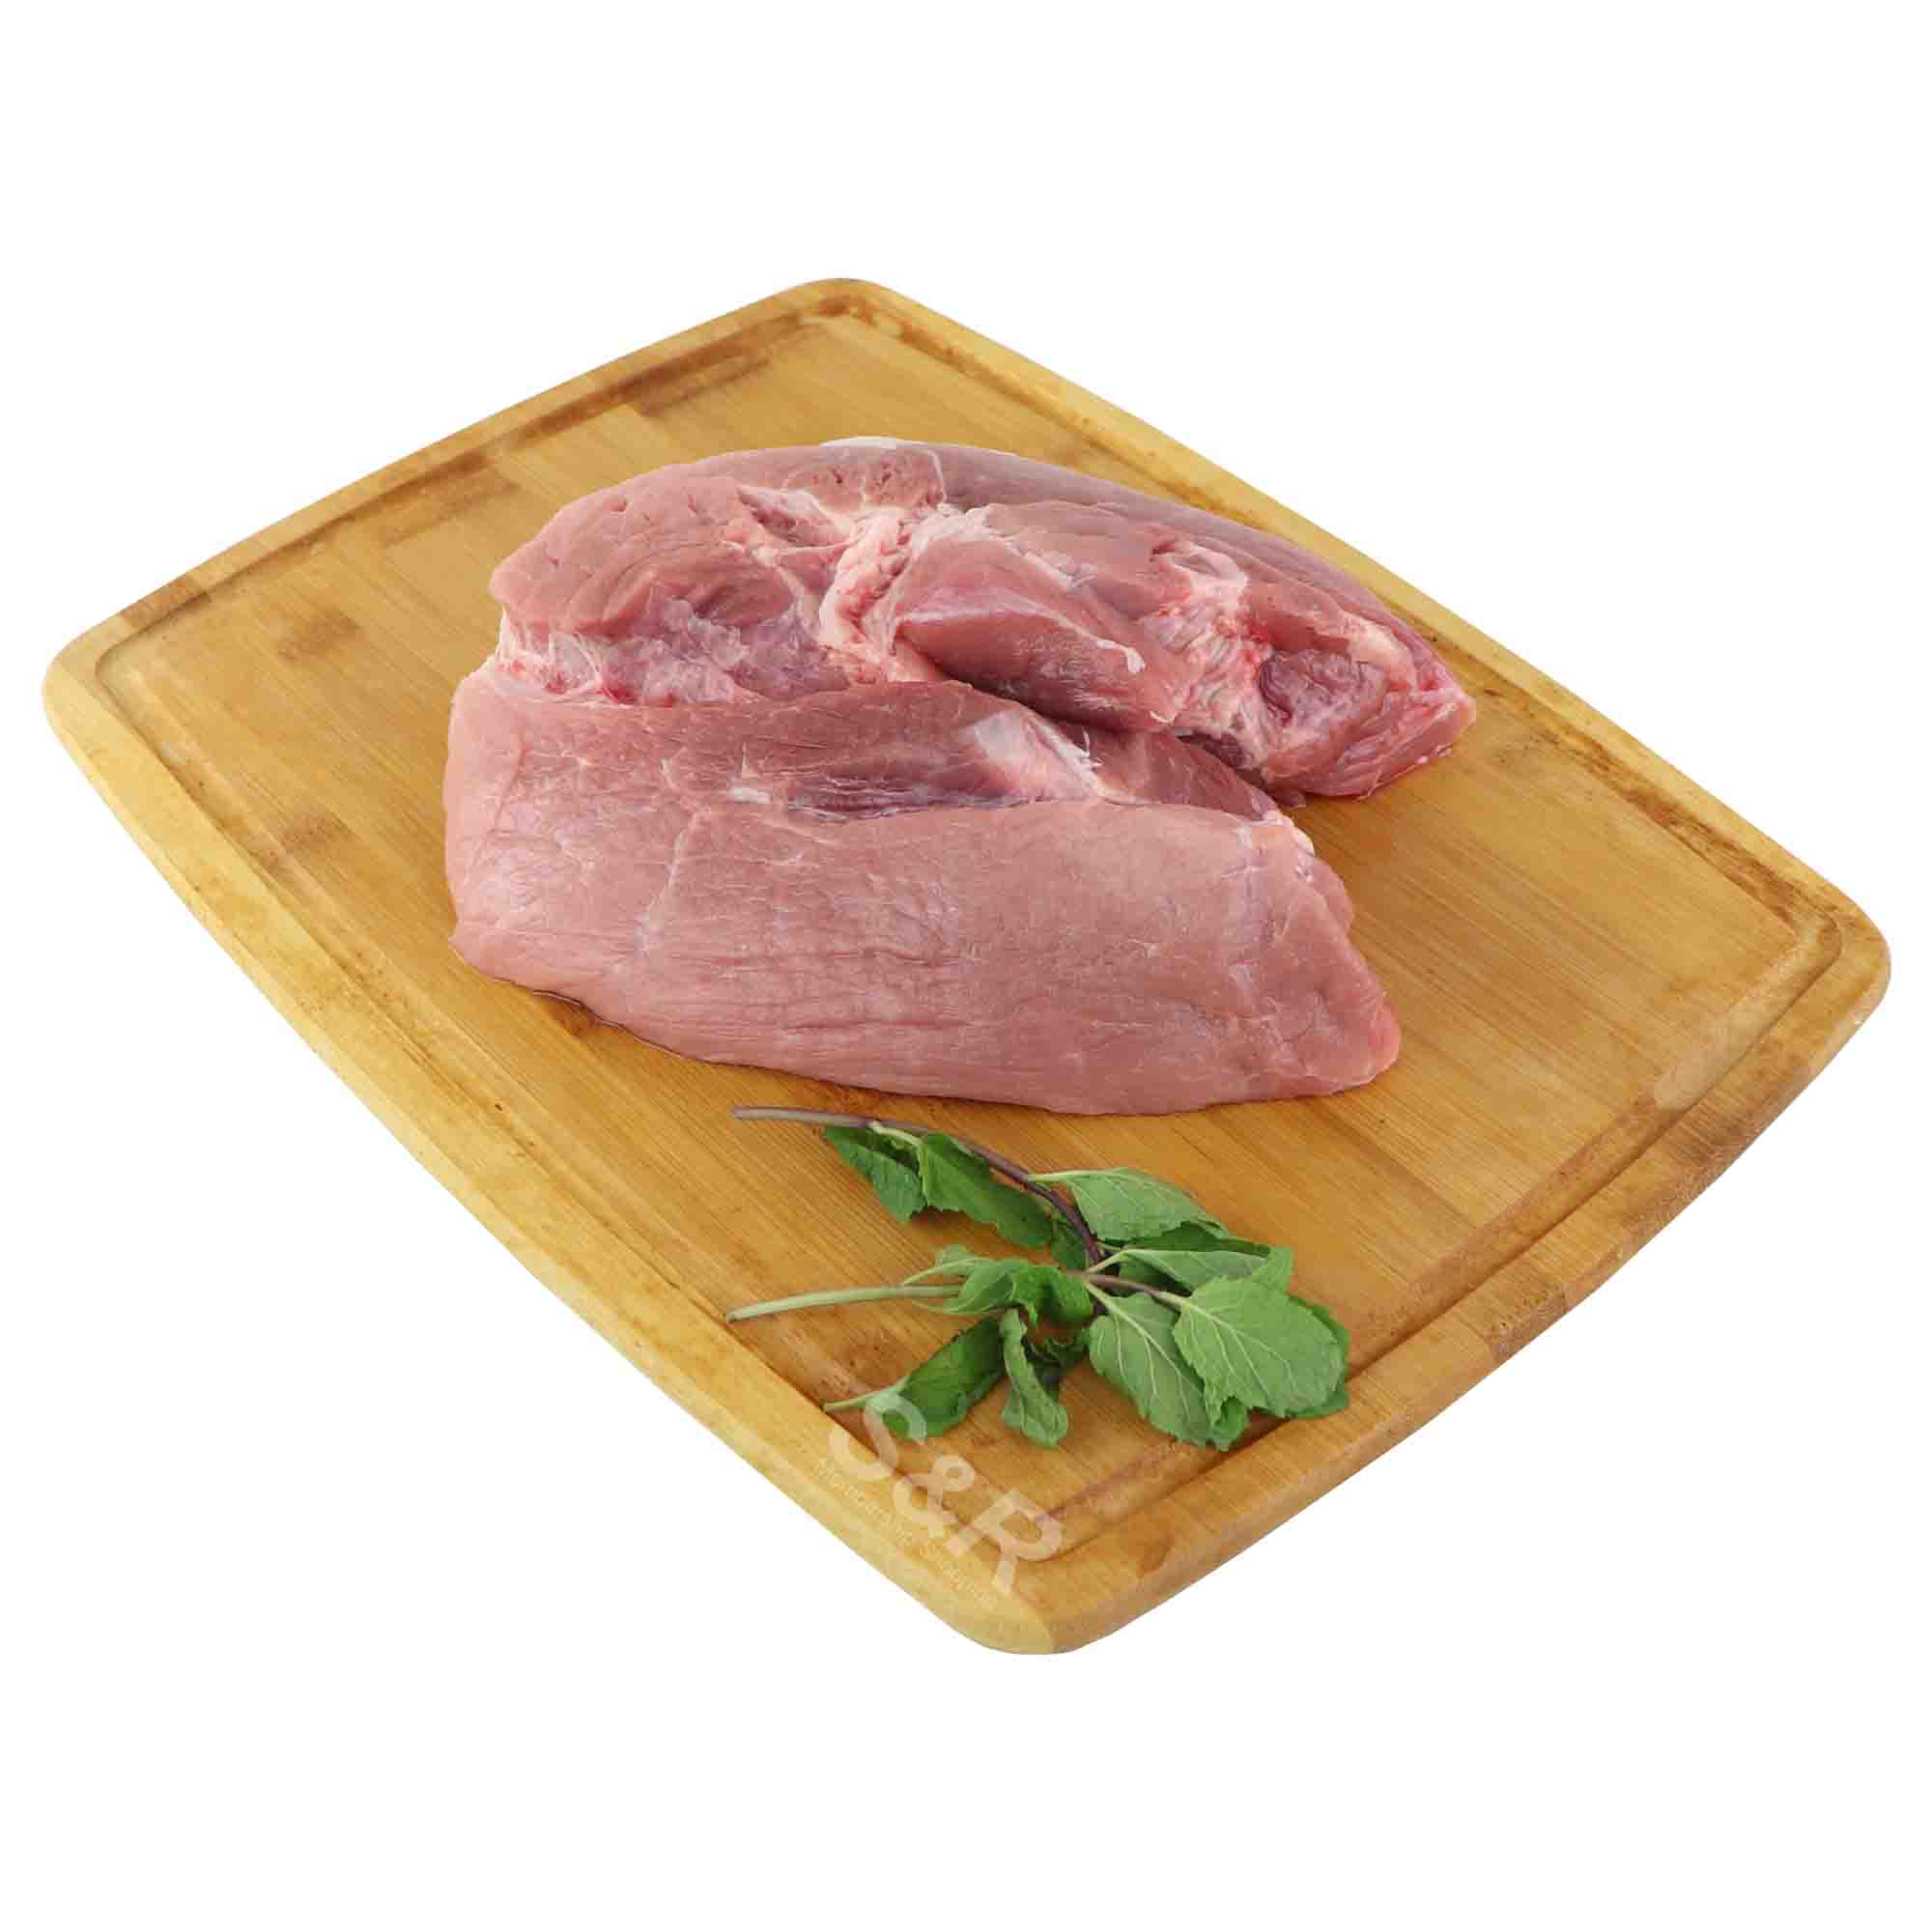 Members' Value Pork Pigue Skinless Boneless approx. 1.7kg